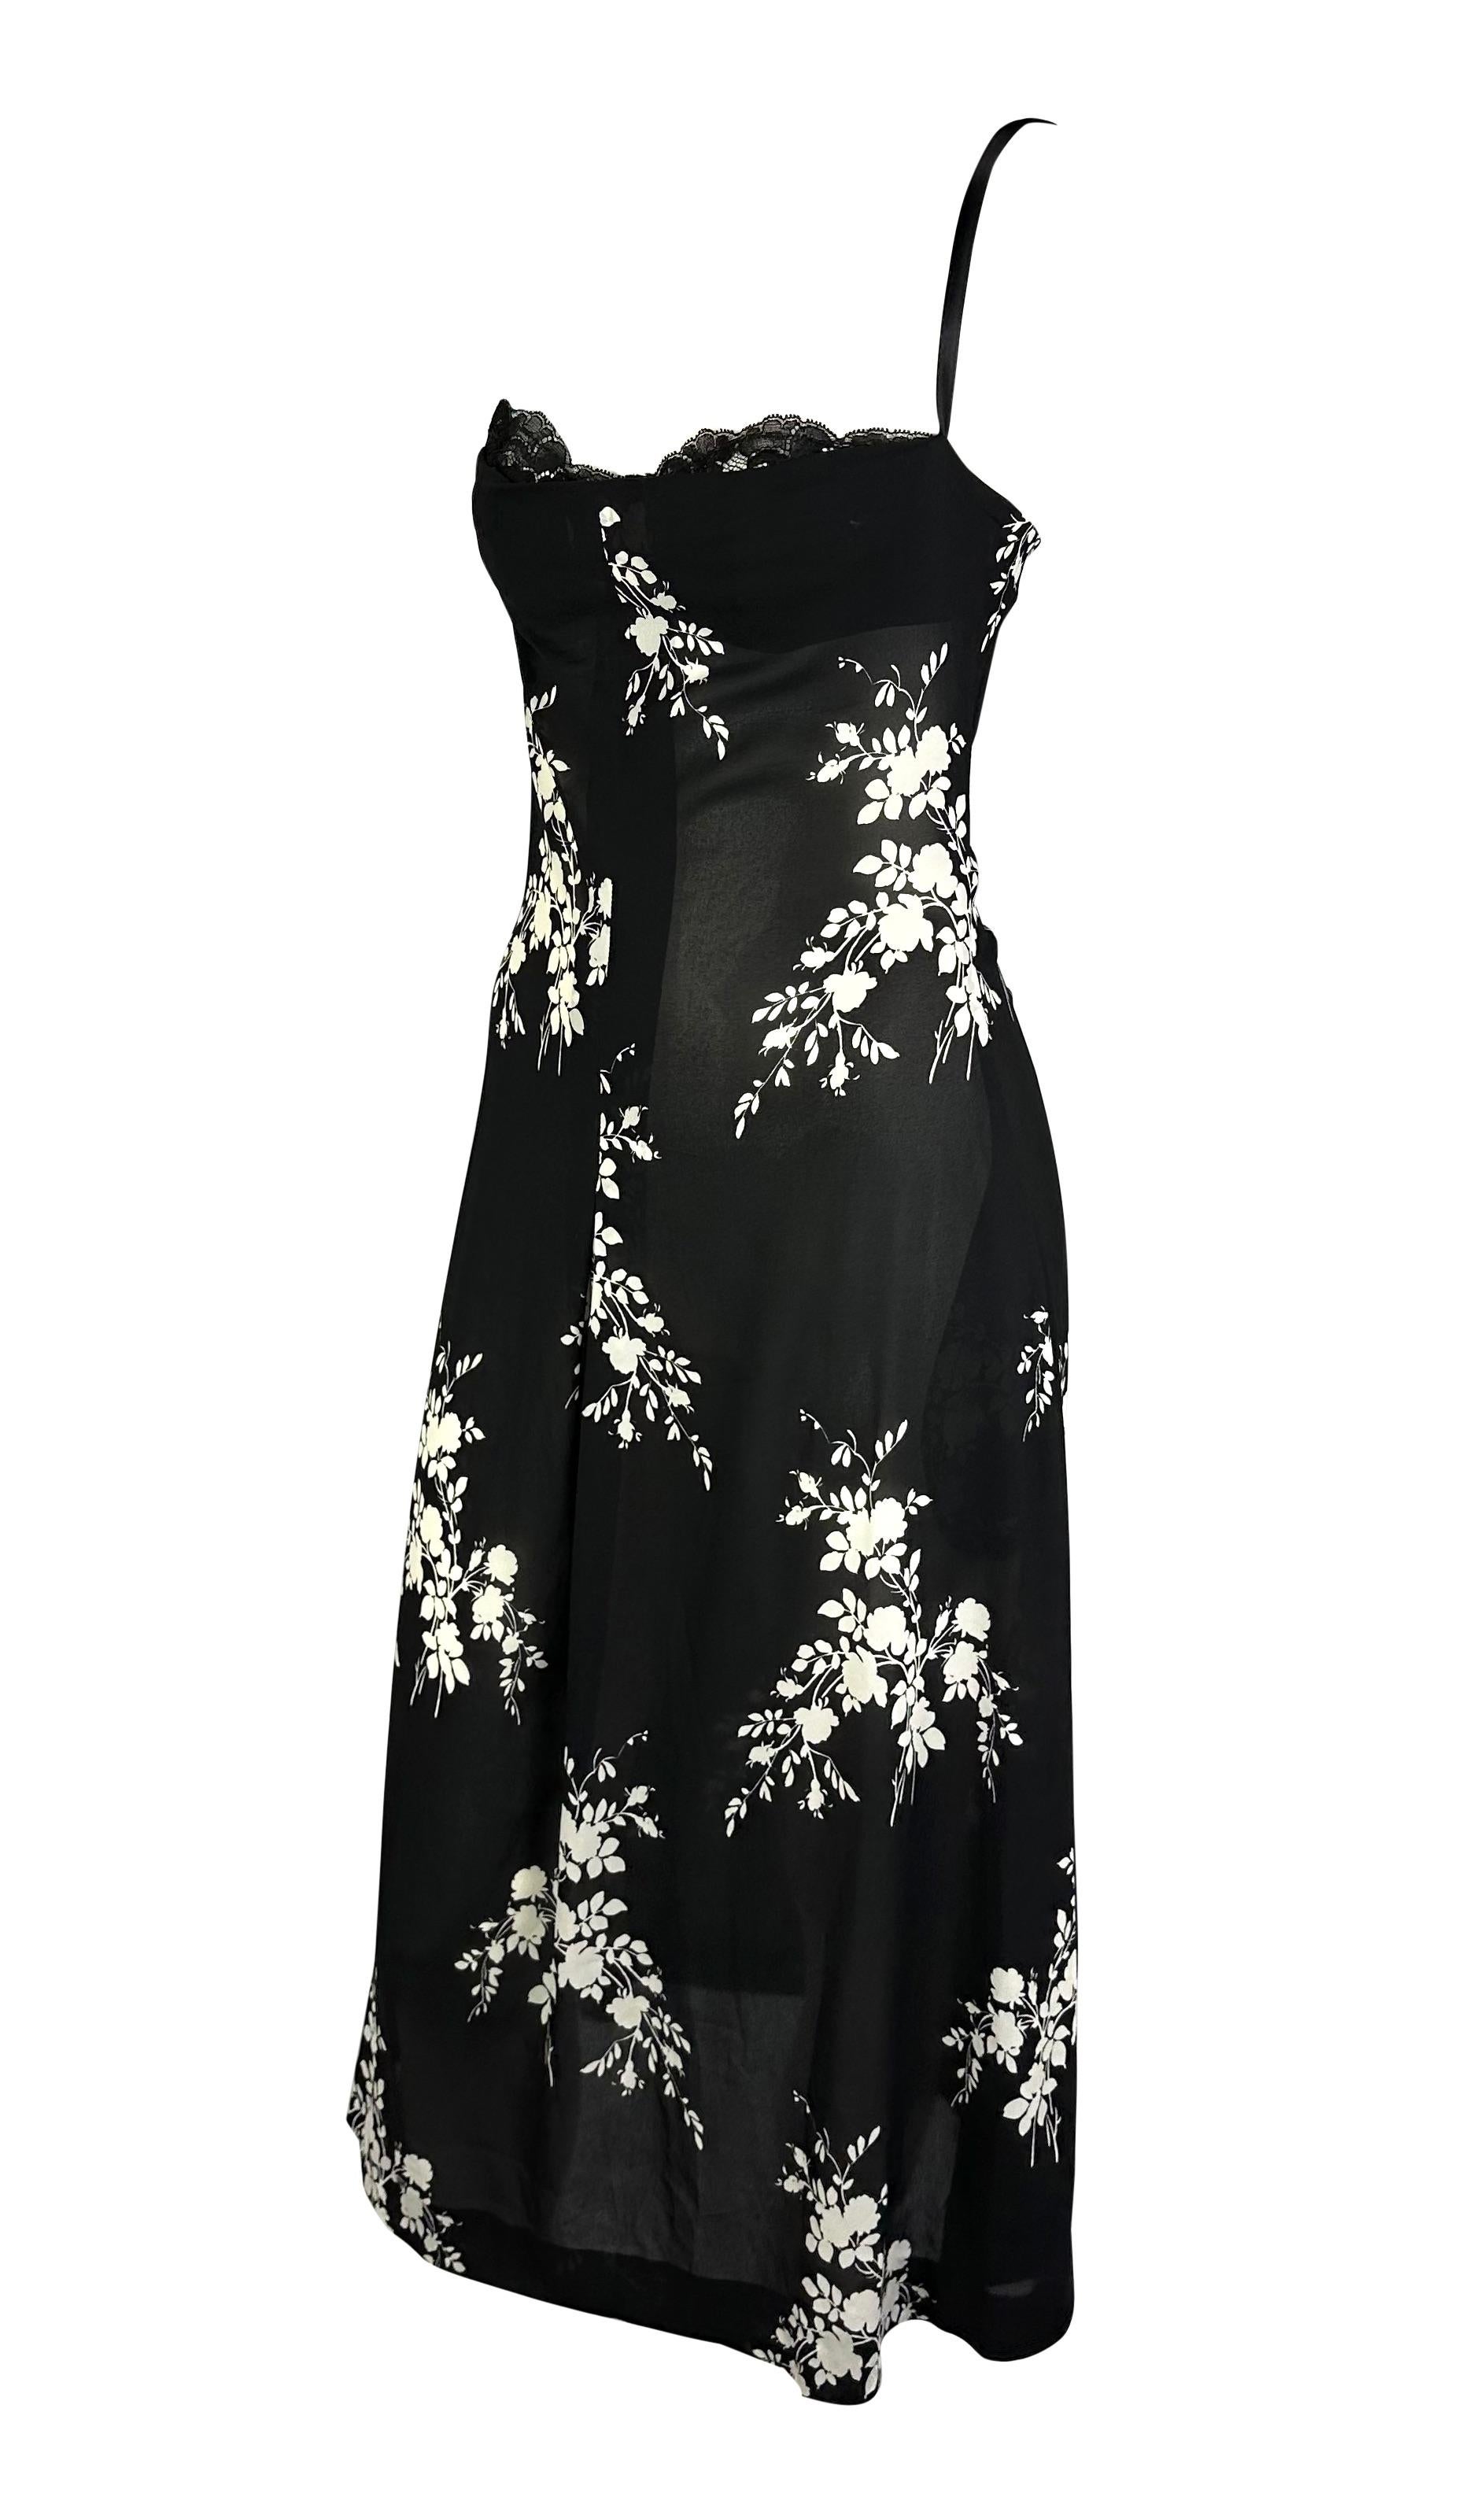 S/S 2002 Dolce & Gabbana Runway Sheer Black Stretch Silk Floral Bustier Dress 1